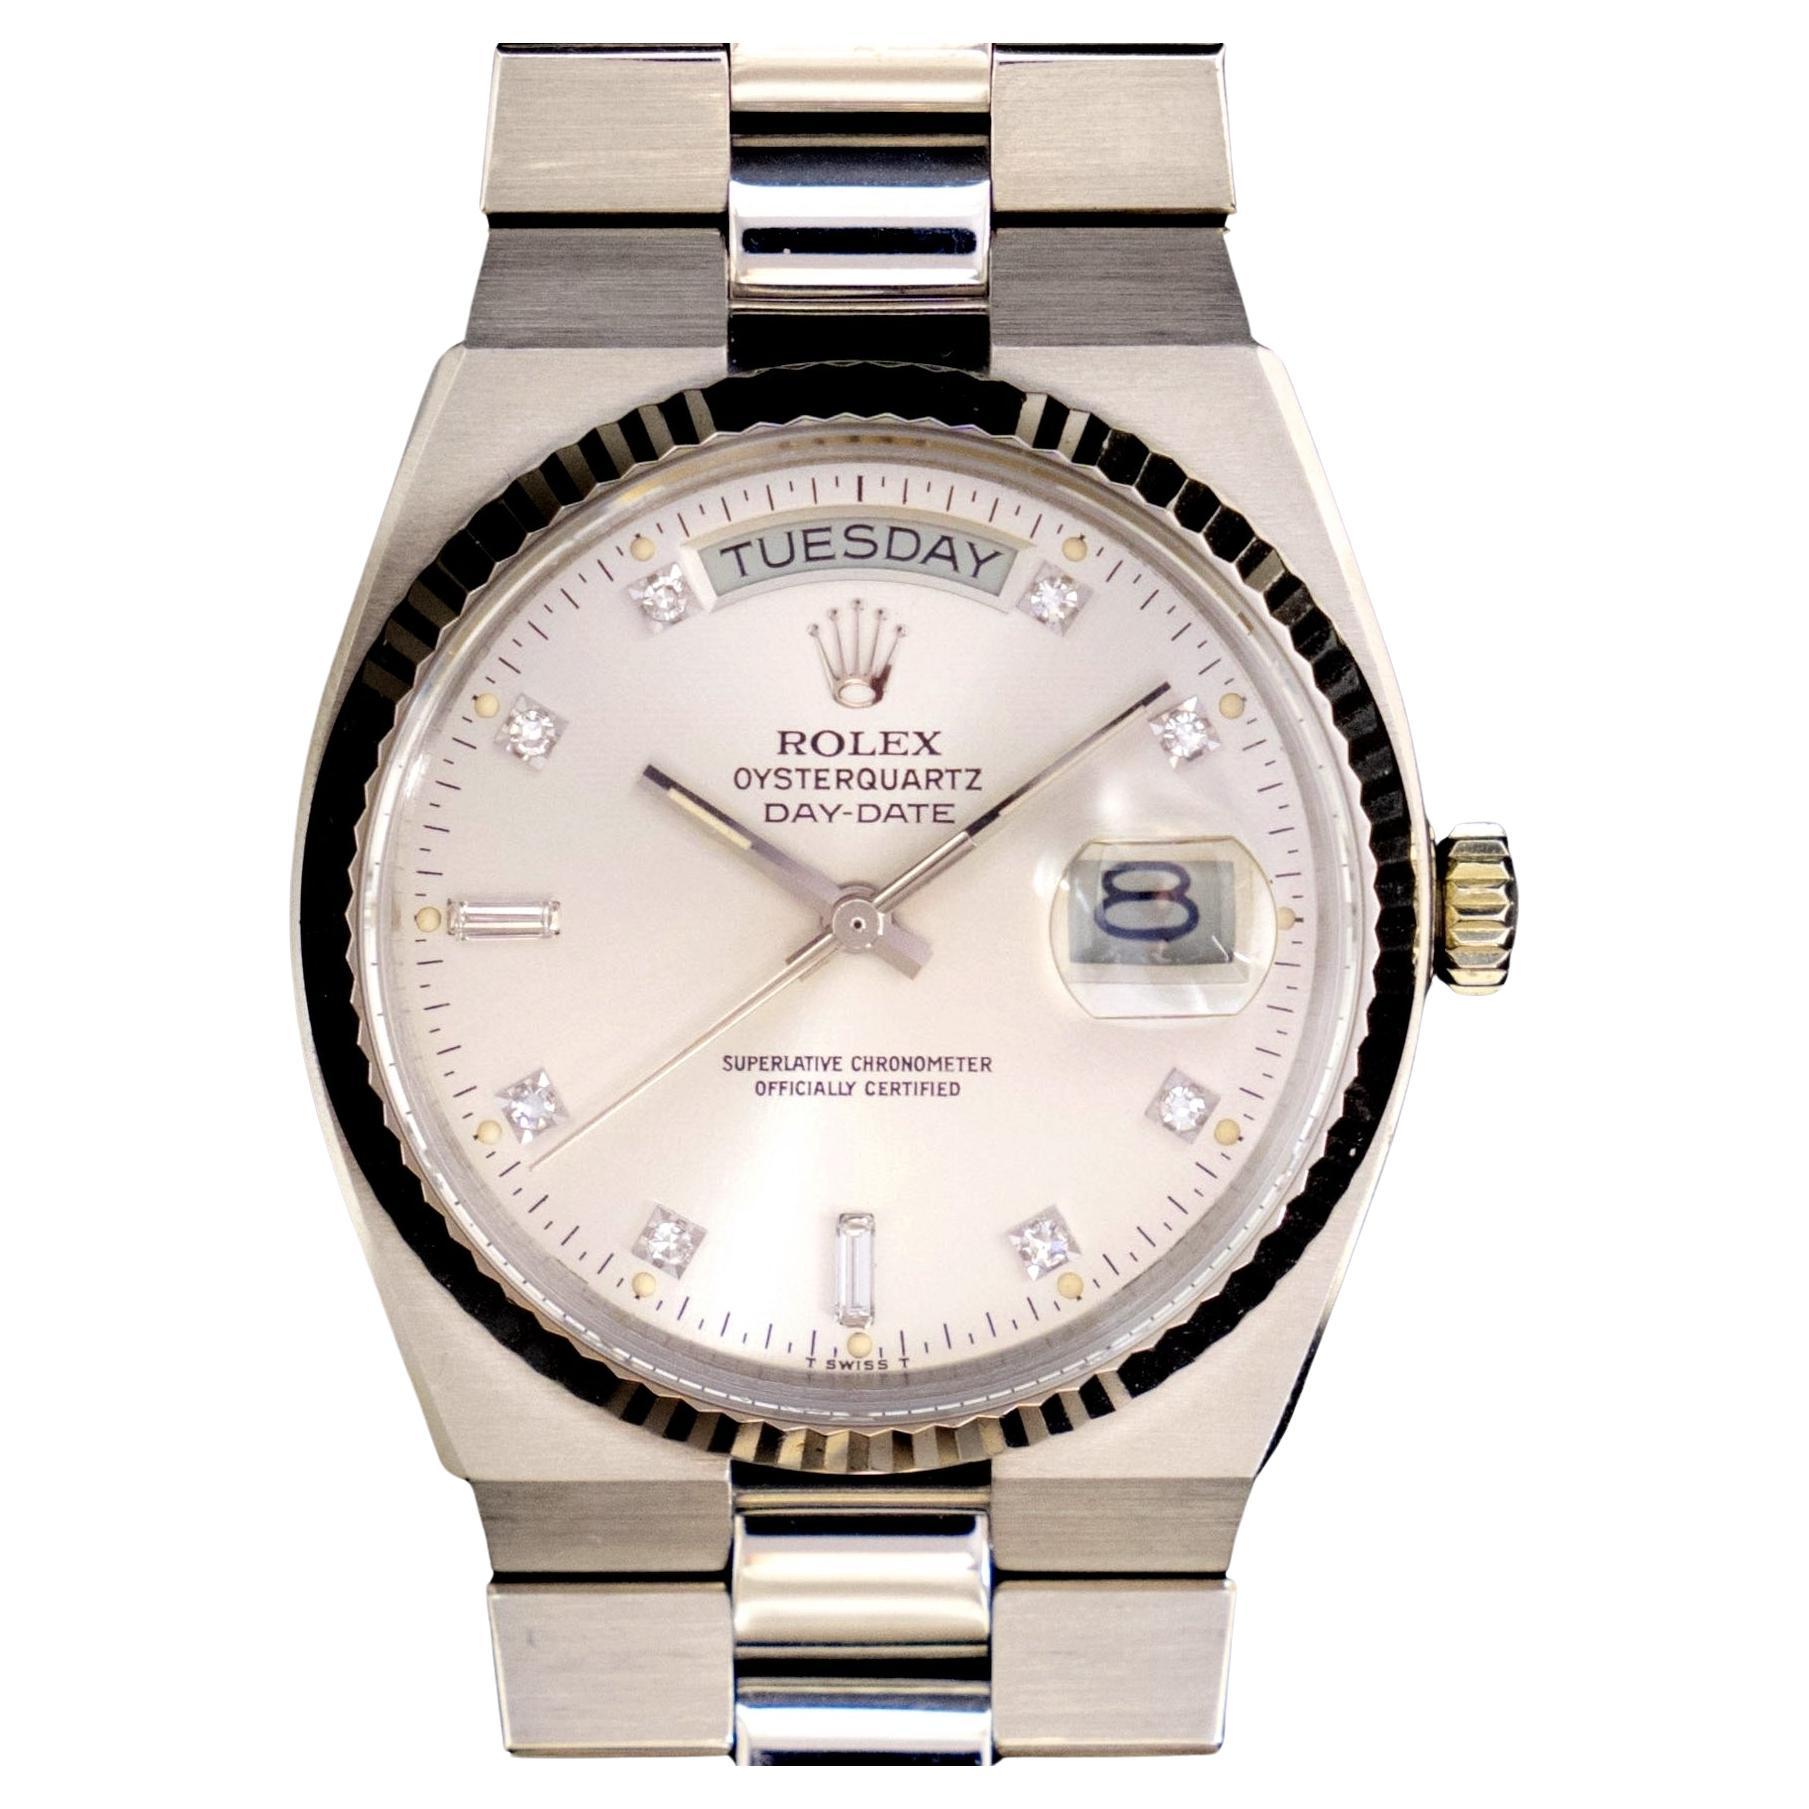 Rolex Oysterquartz Day-Date 18K White Gold Silver Diamond Dial Watch 19019, 1979